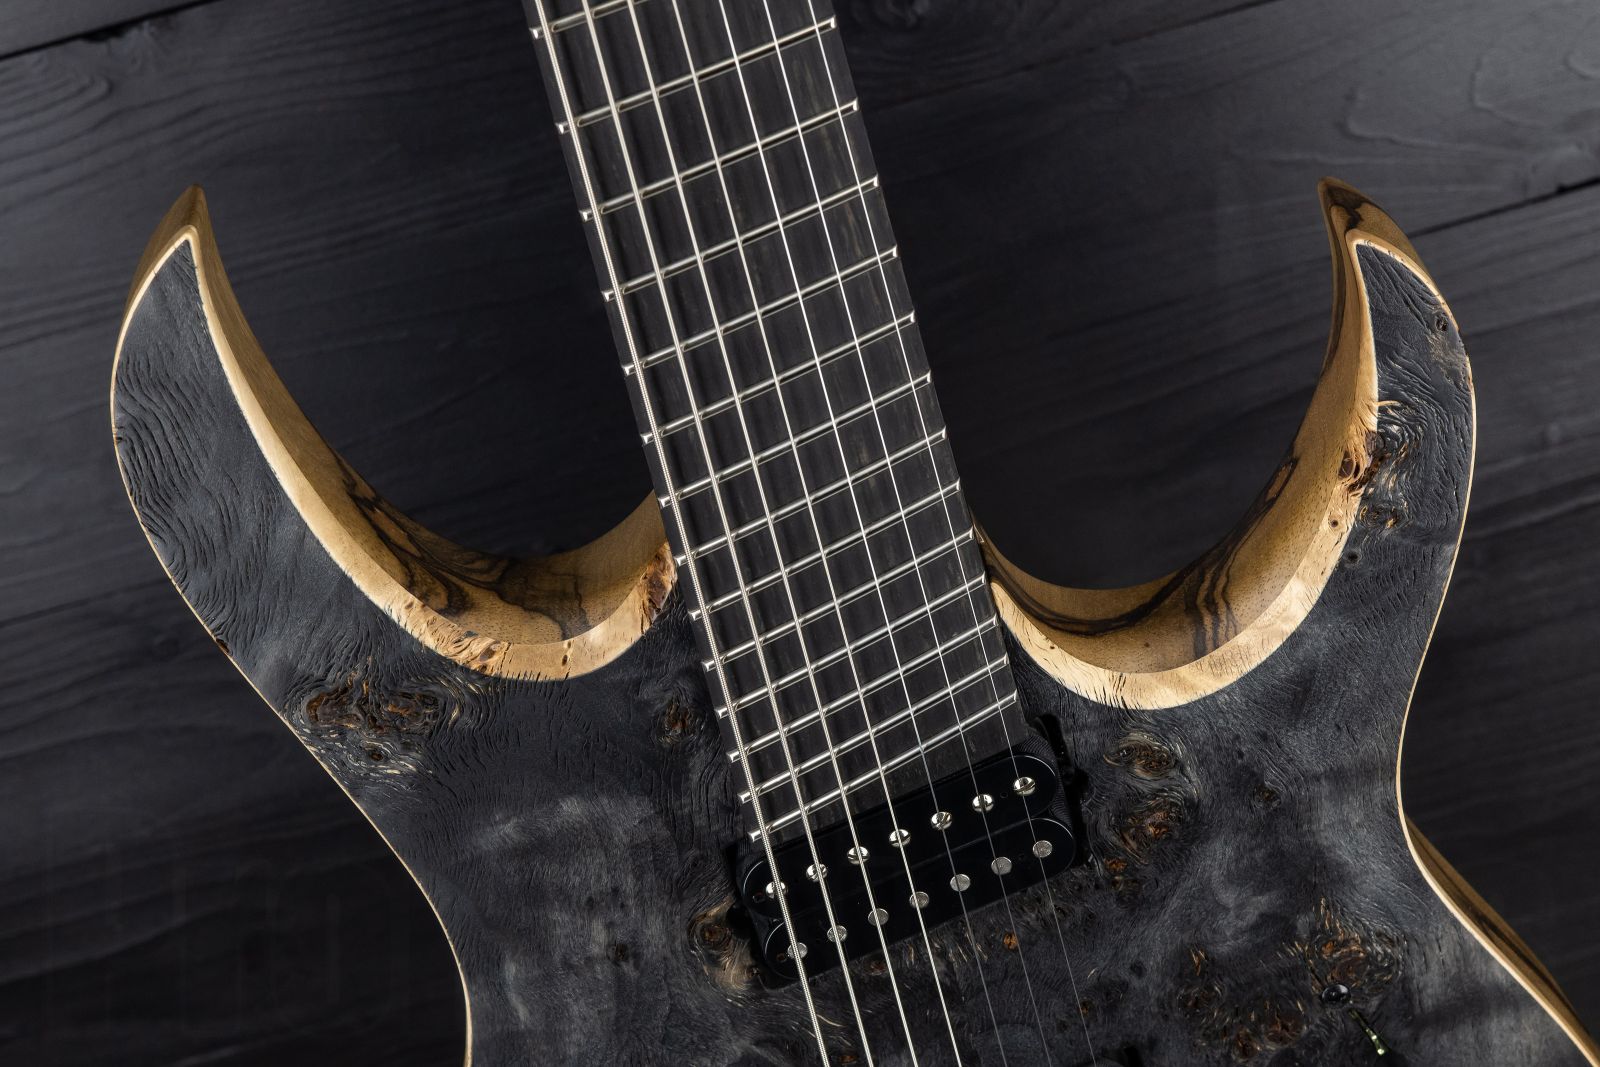 Guitarra Mayones Duvell Elite 7, diapasón de ébano de 7 cuerdas brillo  ráfaga púrpura sucia